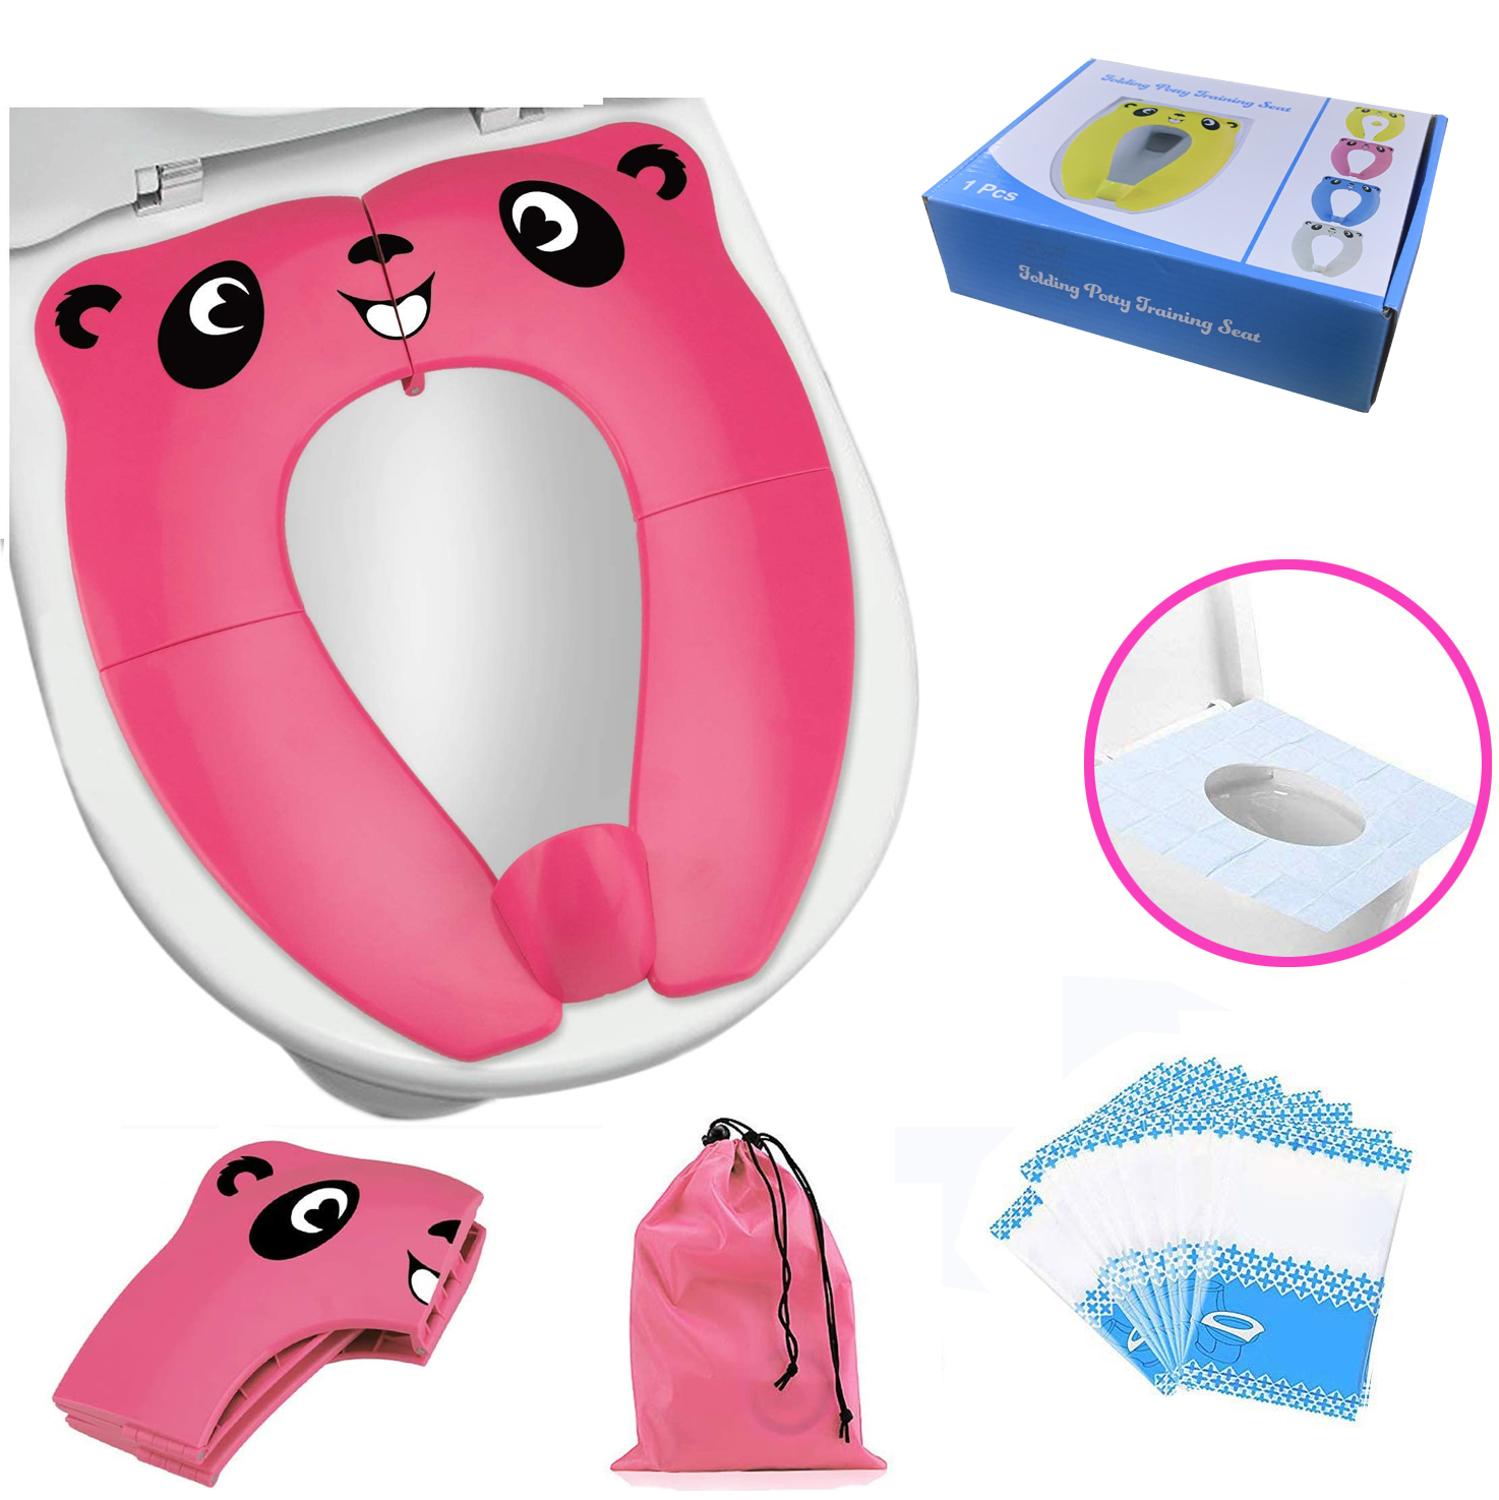 Engangs toiletsædebetræk bærbart pottsæde på toiletsæde toddler pp -materiale med bærepose og 10 pakker (blå): Panda lyserød